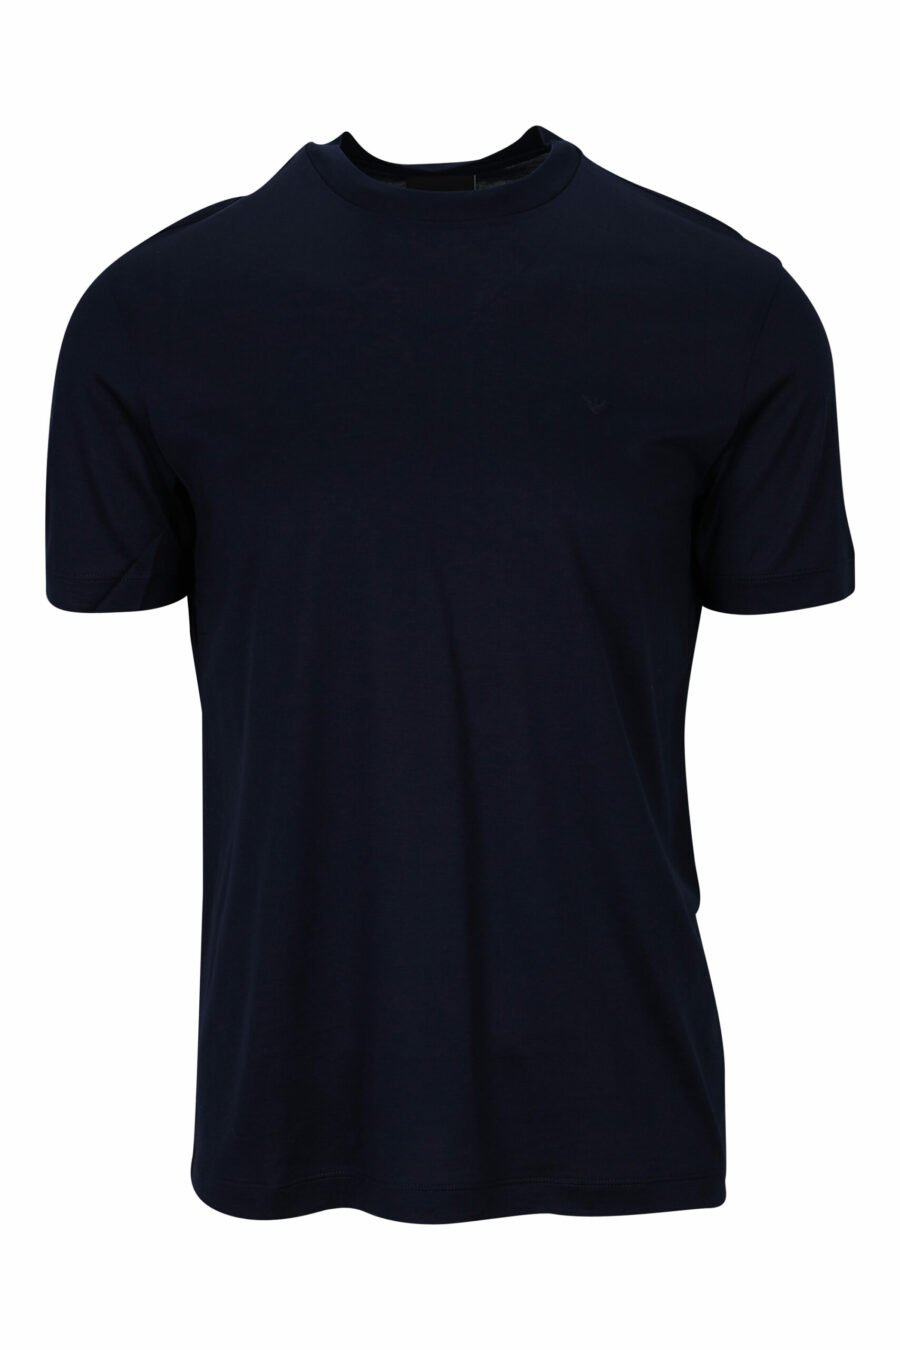 T-shirt bleu marine avec logo eagle mini - 8057767732455 scaled